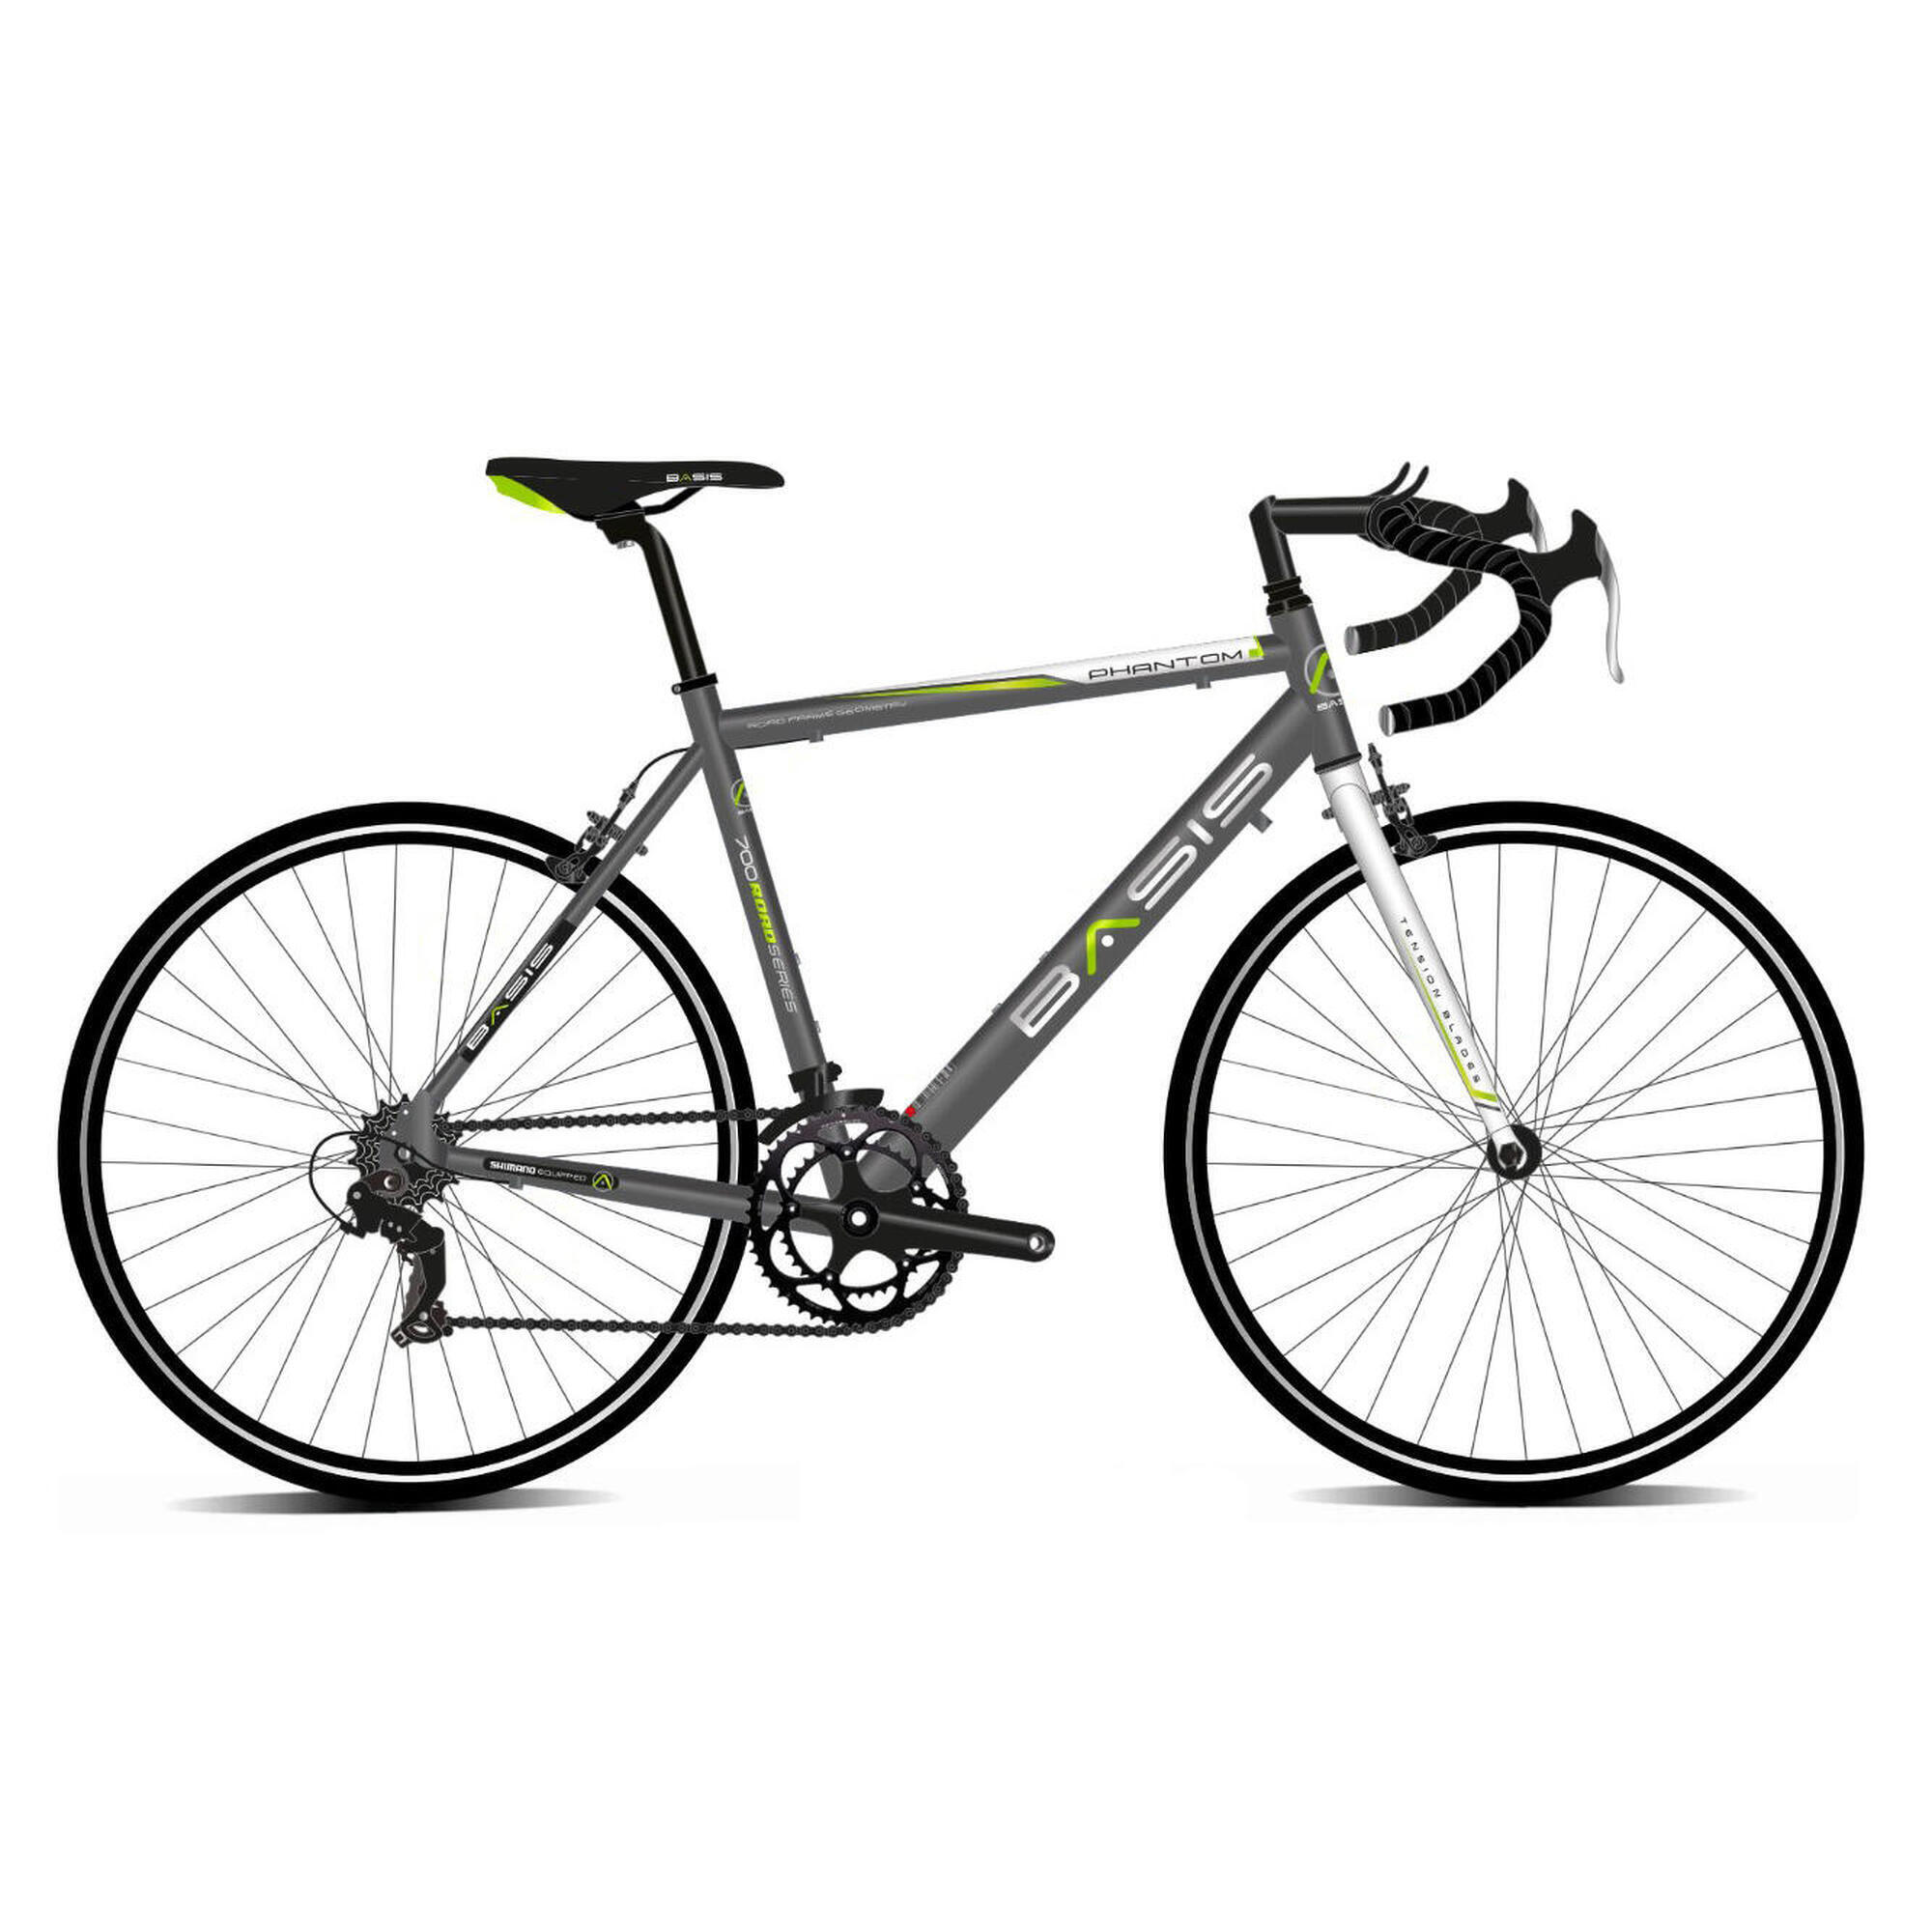 Basis Phantom Unisex Road Bike, 700c Wheel - Gloss Grey/Lime/White 1/1